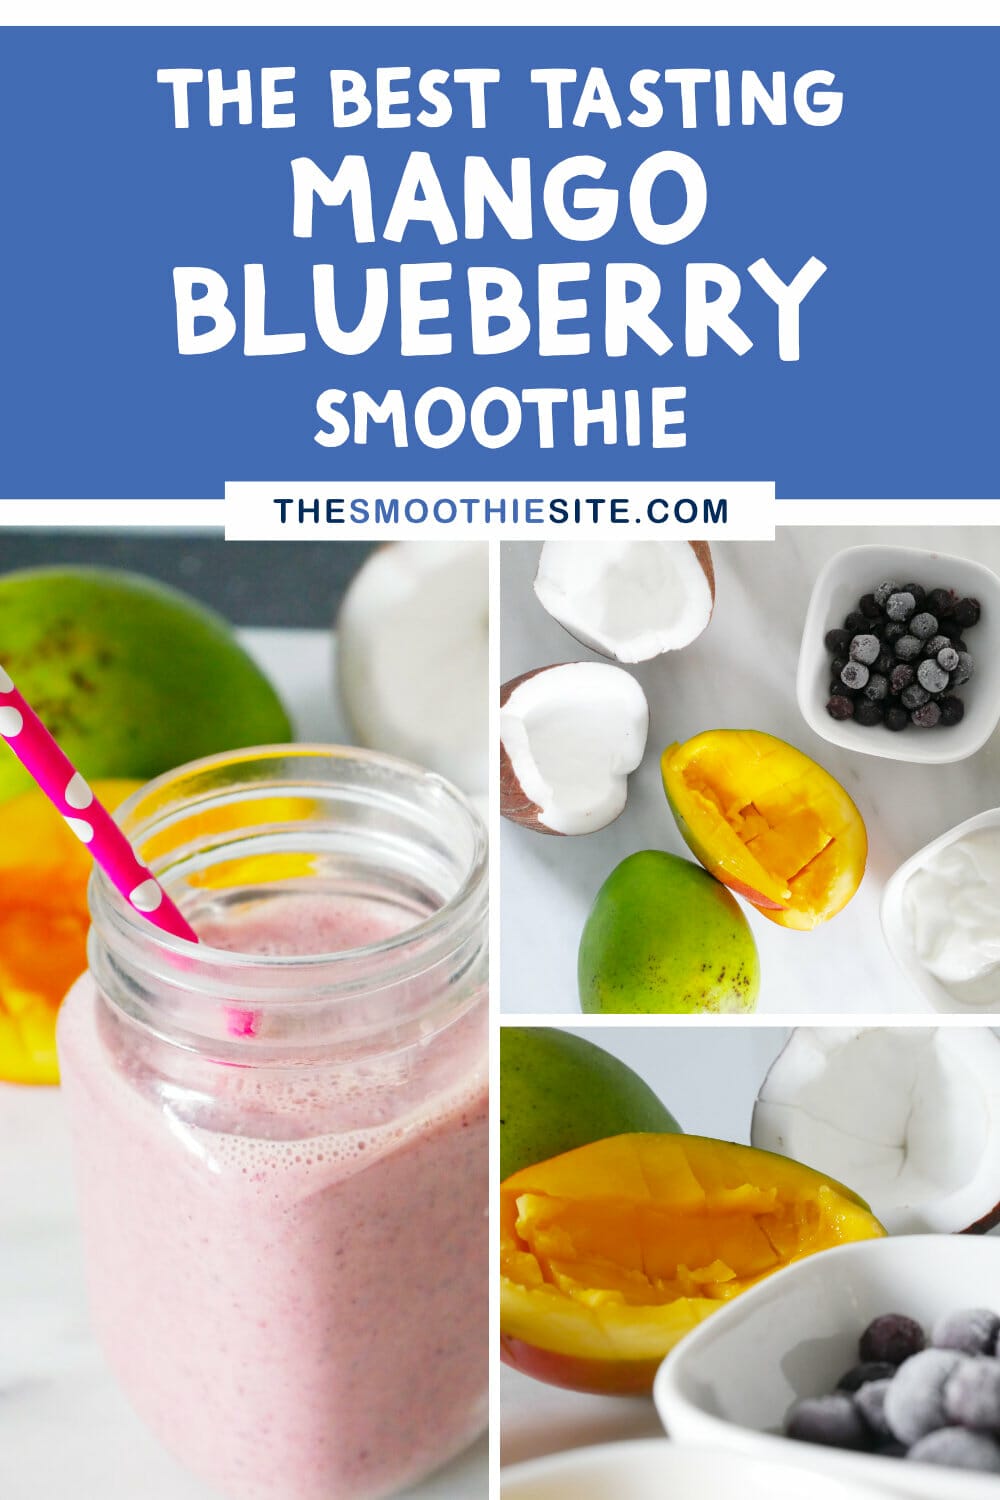 The BEST tasting mango blueberry smoothie recipe! (+ Tips!) via @thesmoothiesite